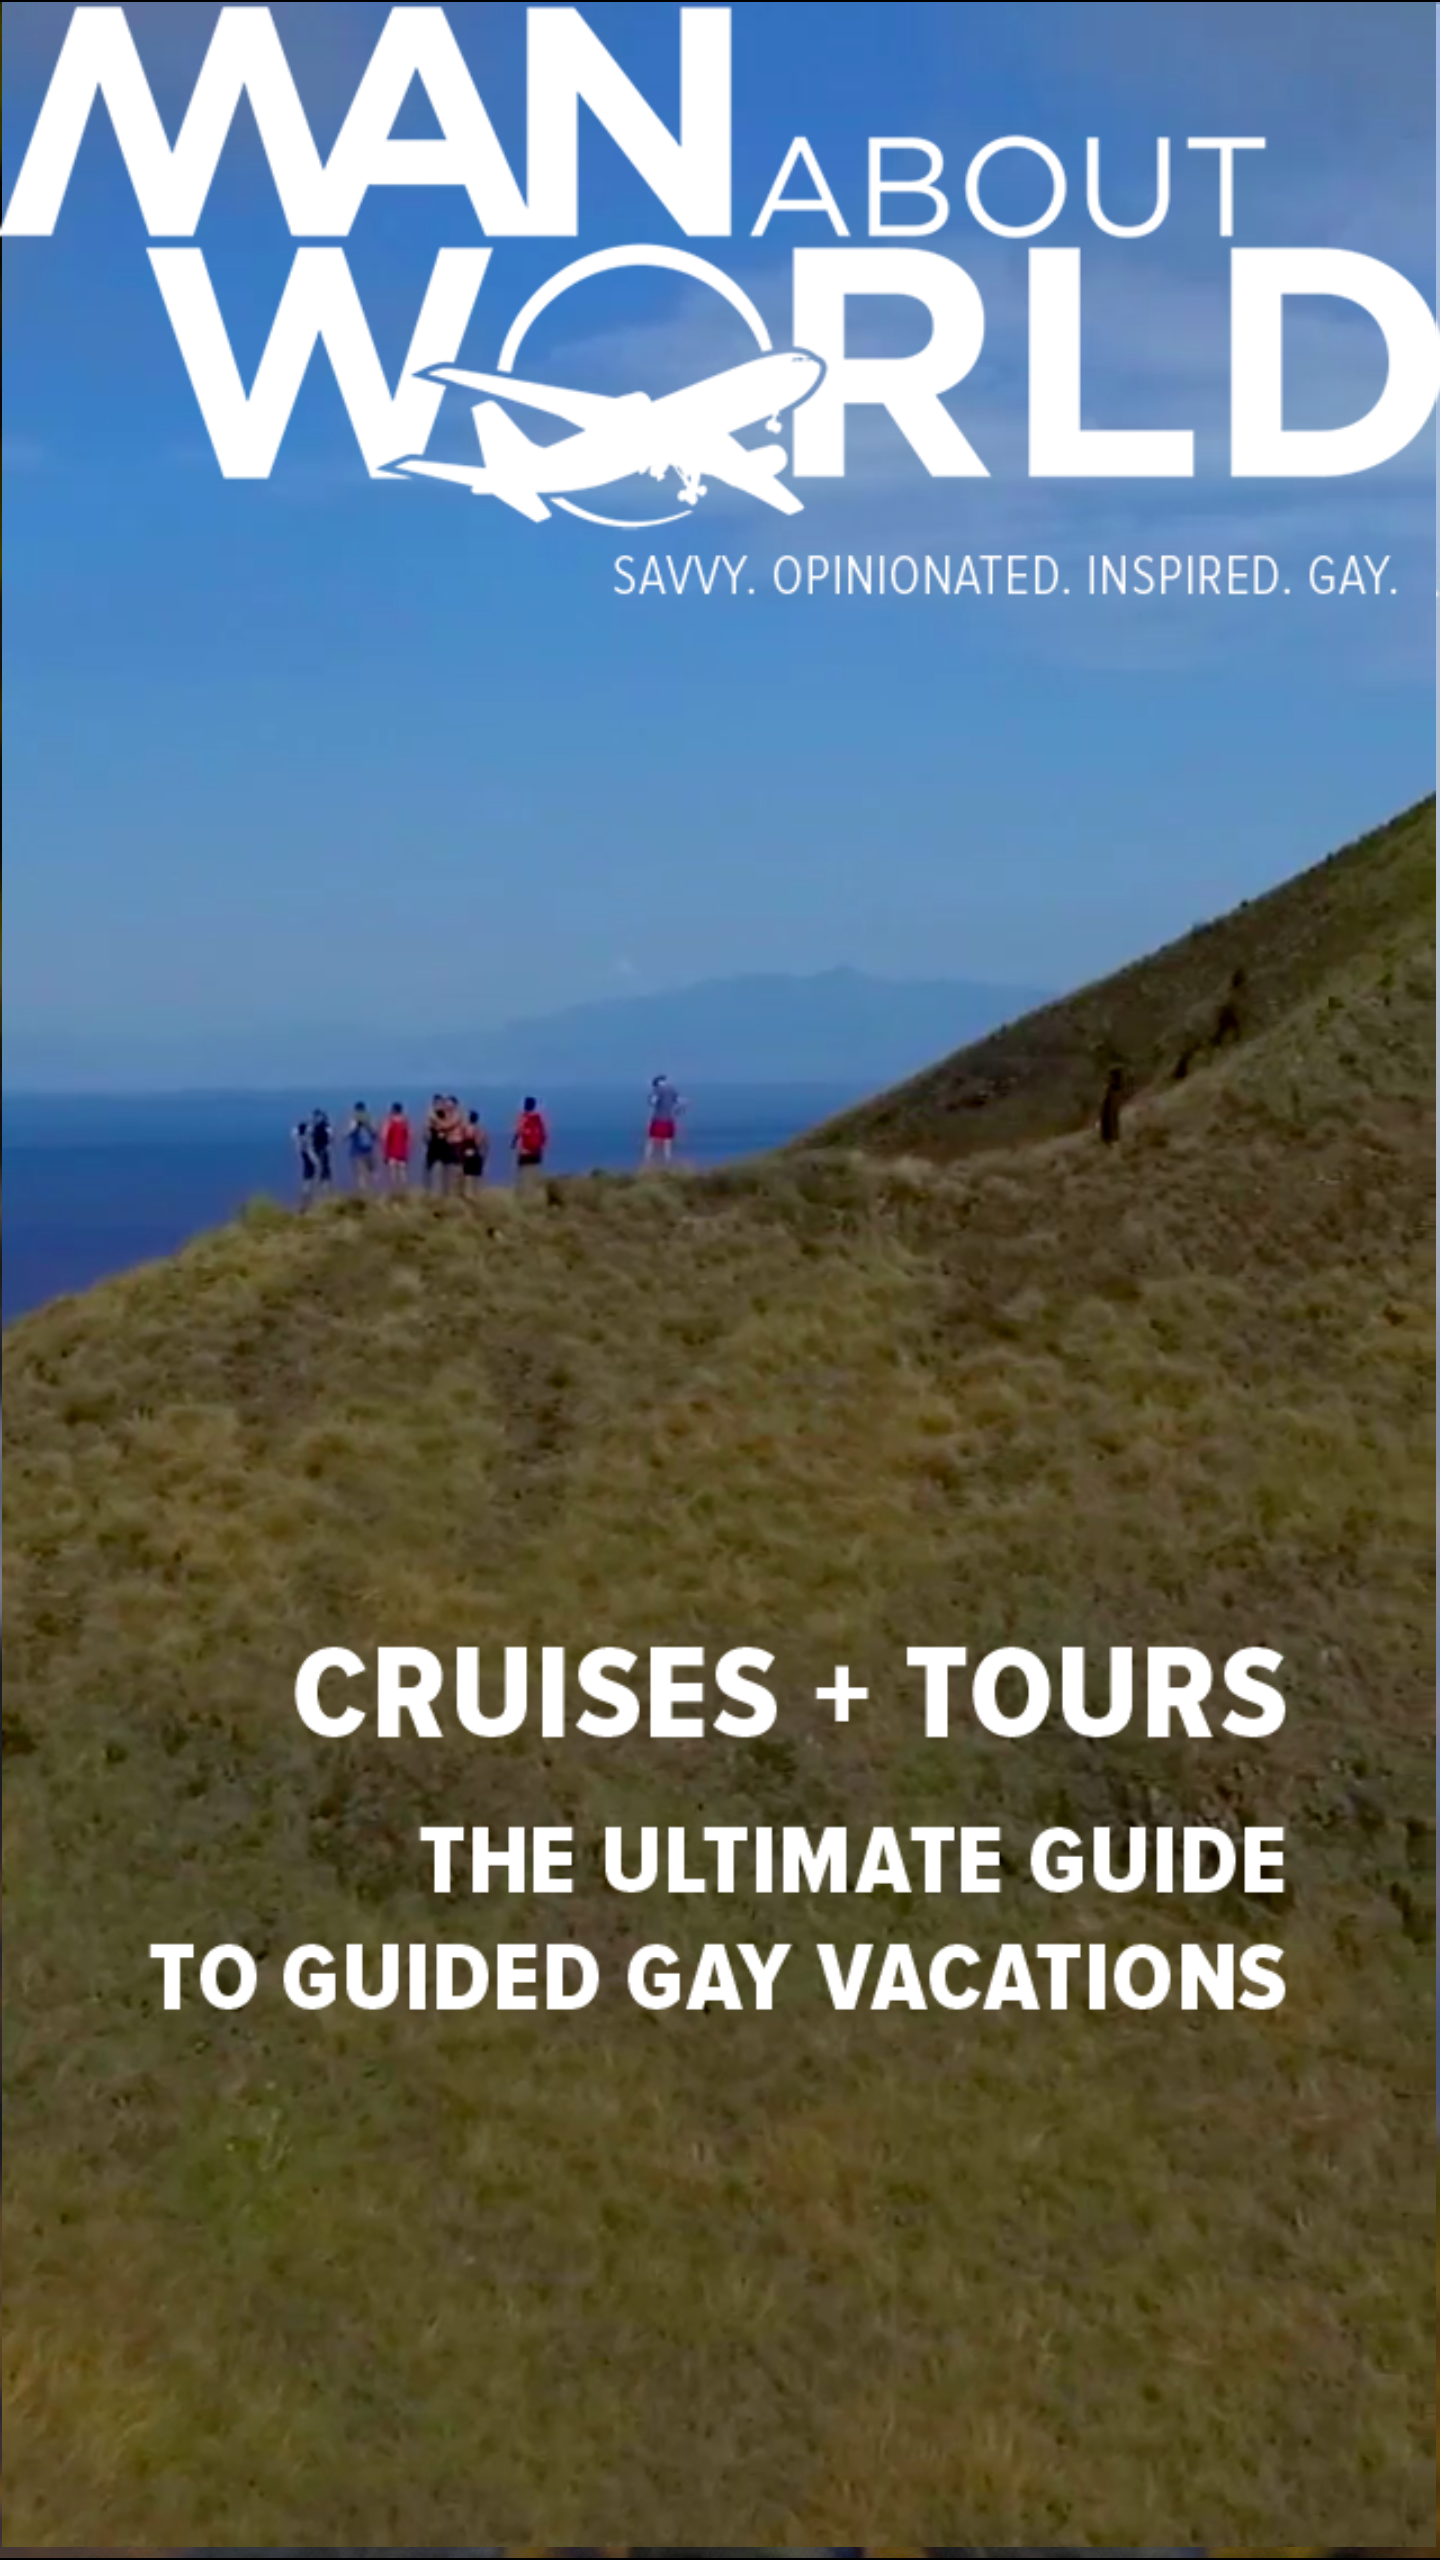 tours-cruises-cover-image-i5